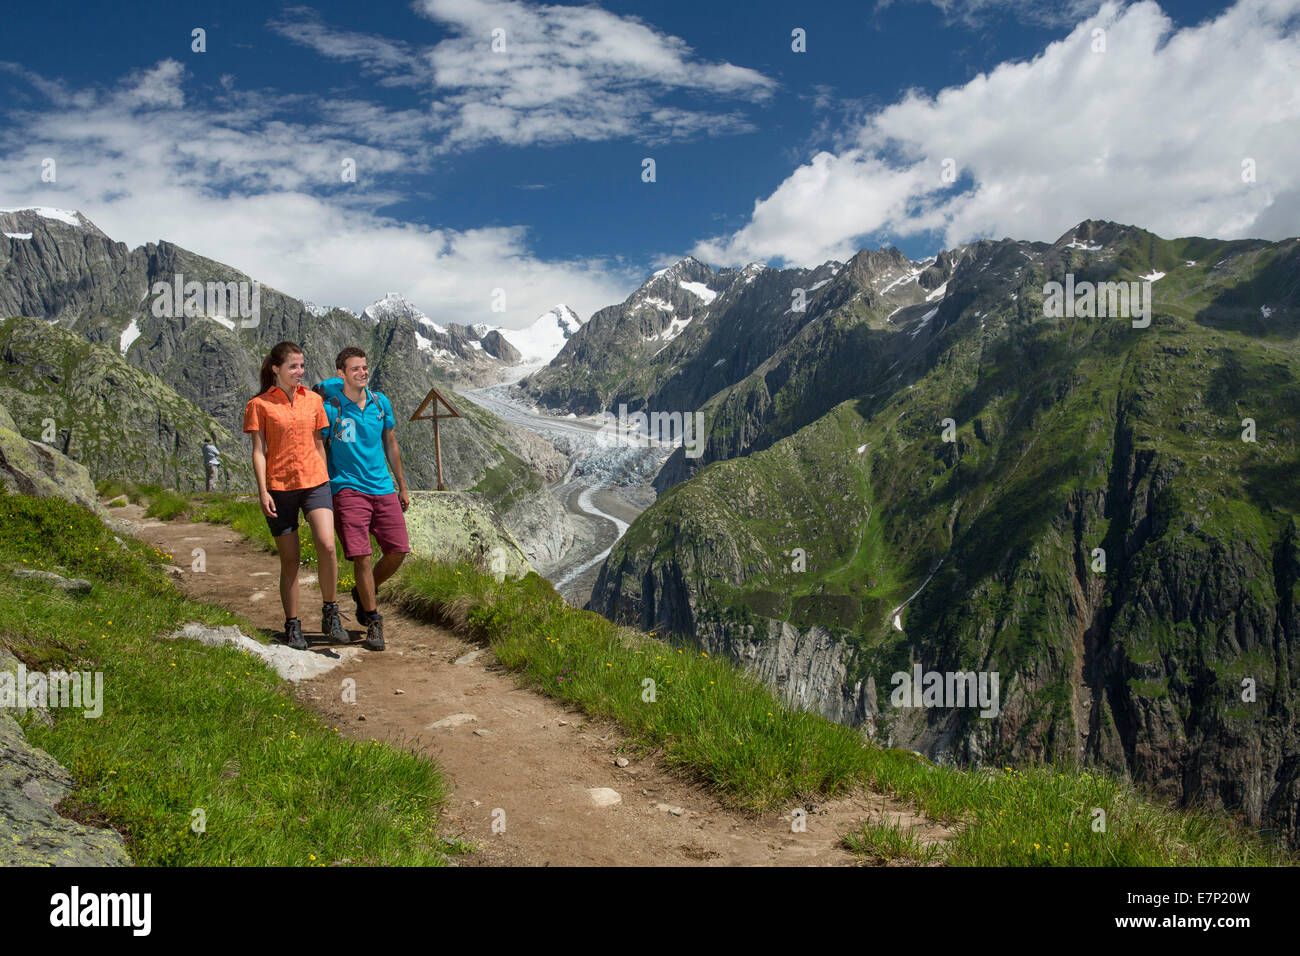 Kühboden, hiker, Fieschergletscher, mountain, mountains, glacier, ice, moraine, sport, spare time, adventure, canton, VS, Valais Stock Photo